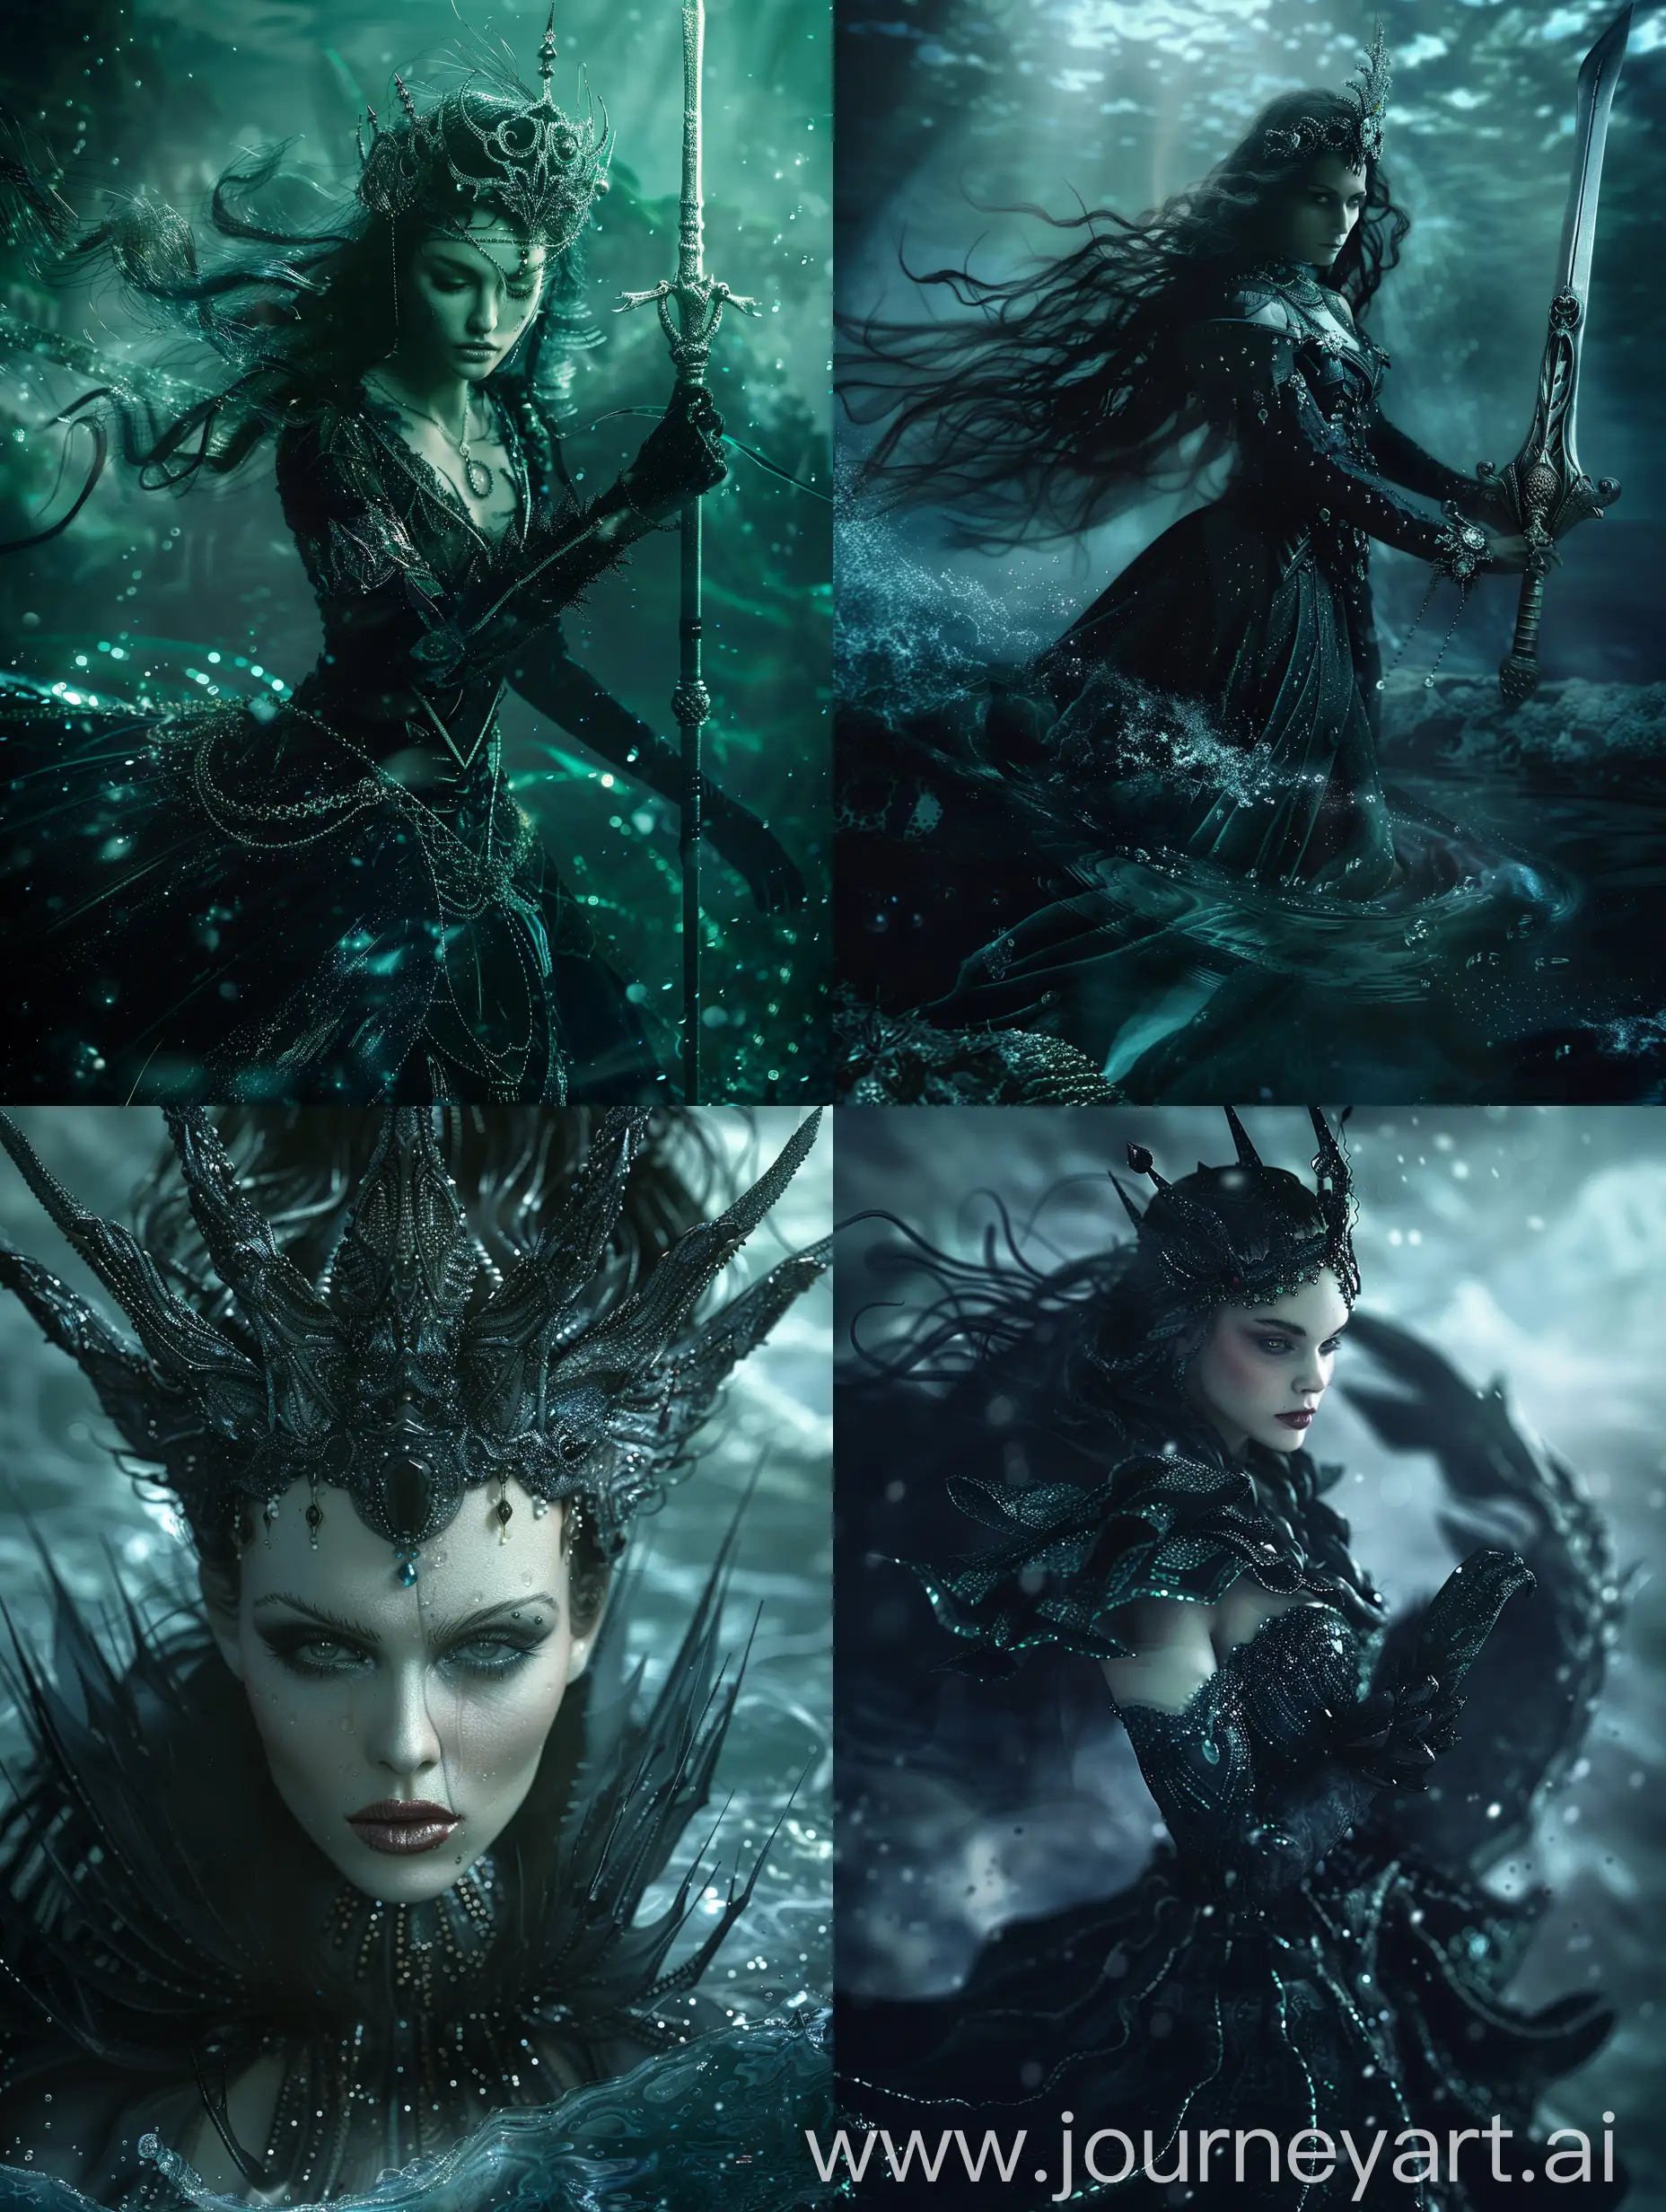 Mythical-Sea-Queen-in-a-Dark-Fantasy-Underwater-Kingdom